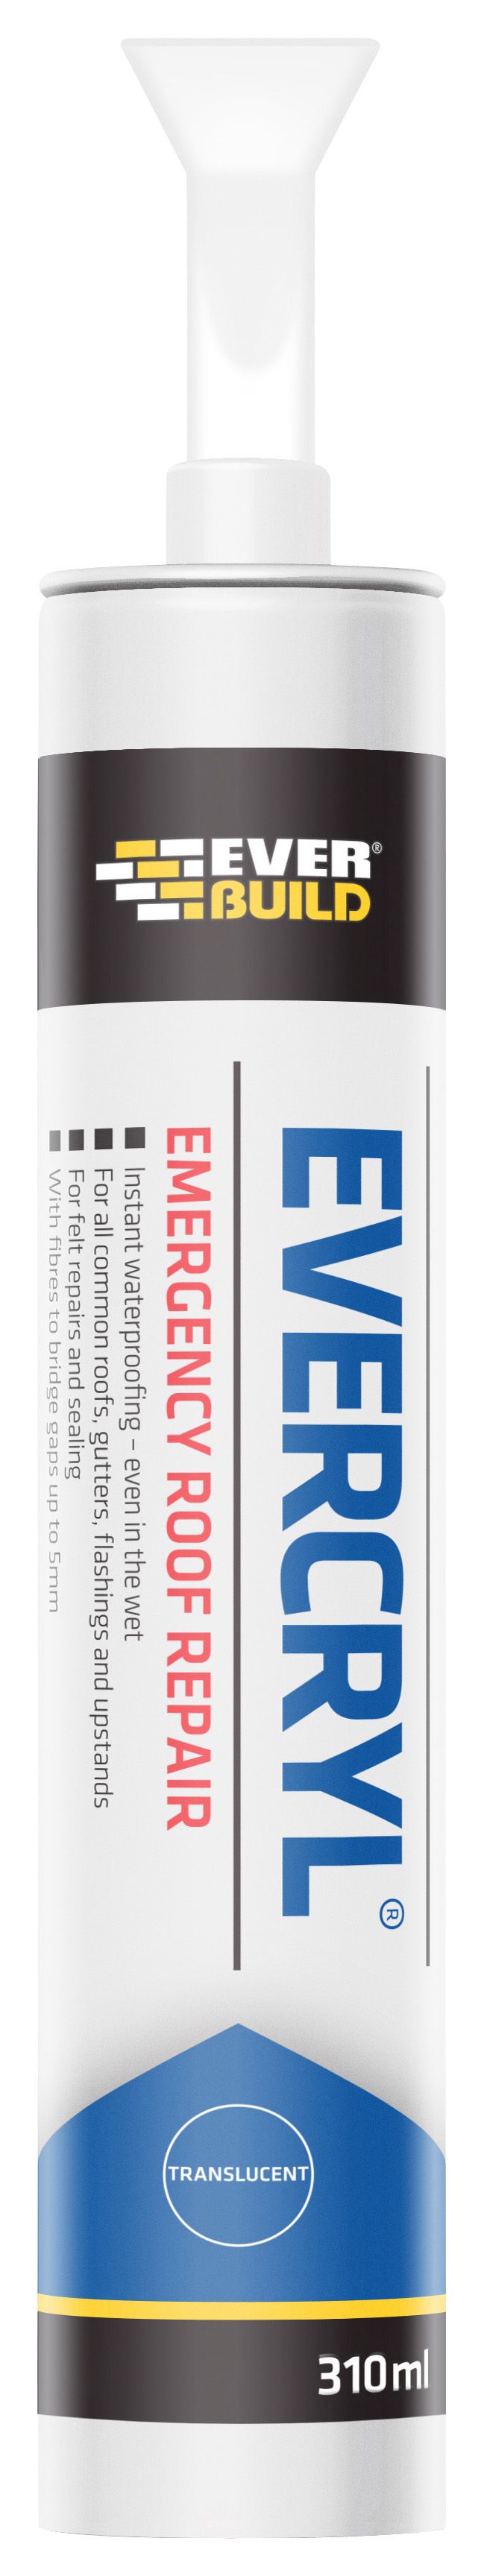 Image of Everbuild Evercryl Emergency Roof Repair Cartridge - Clear